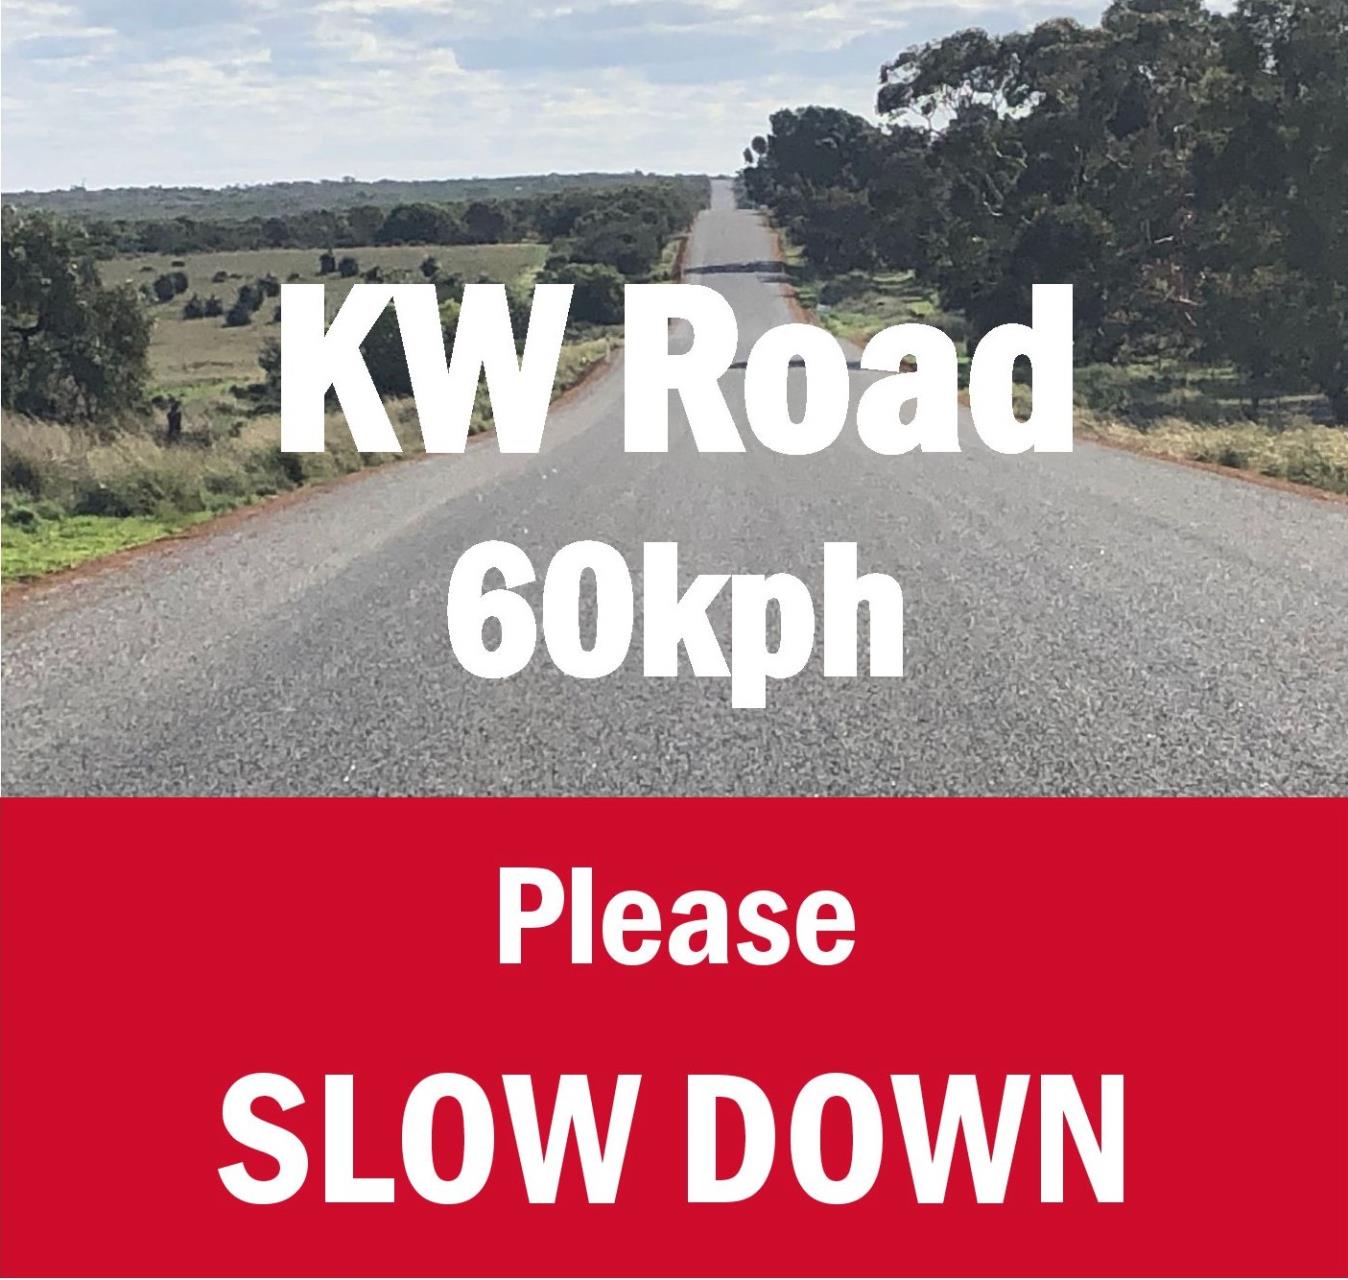 Slow Down on KW Road - 60kph